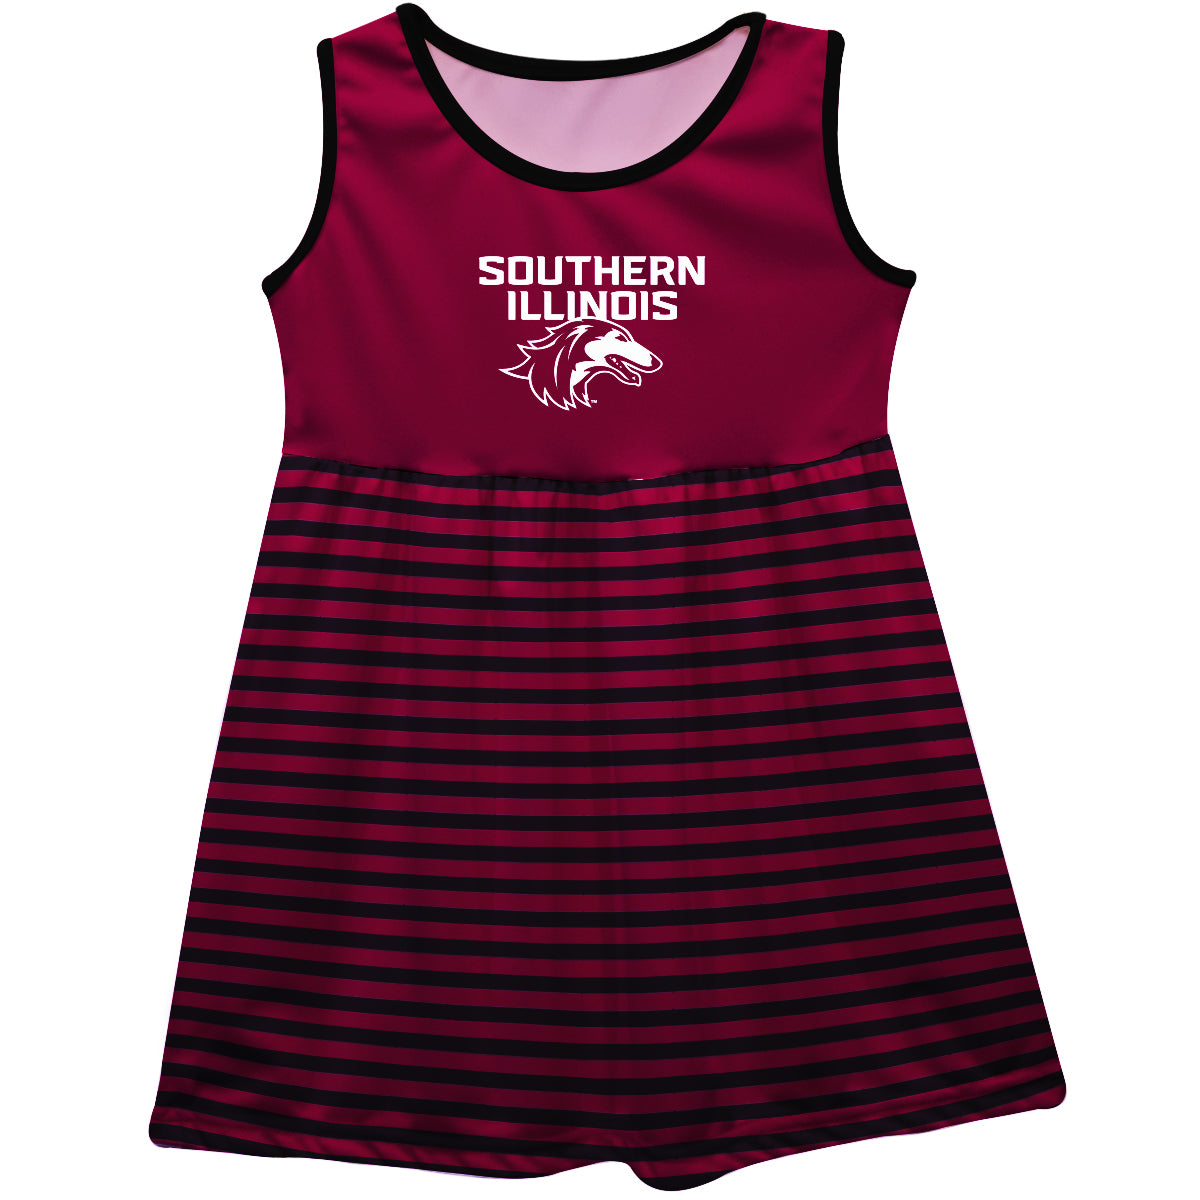 Southern Illinois Salukis SIU Girls Game Day Sleeveless Tank Dress Solid Maroon Logo Stripes on Skirt by Vive La Fete-Campus-Wardrobe